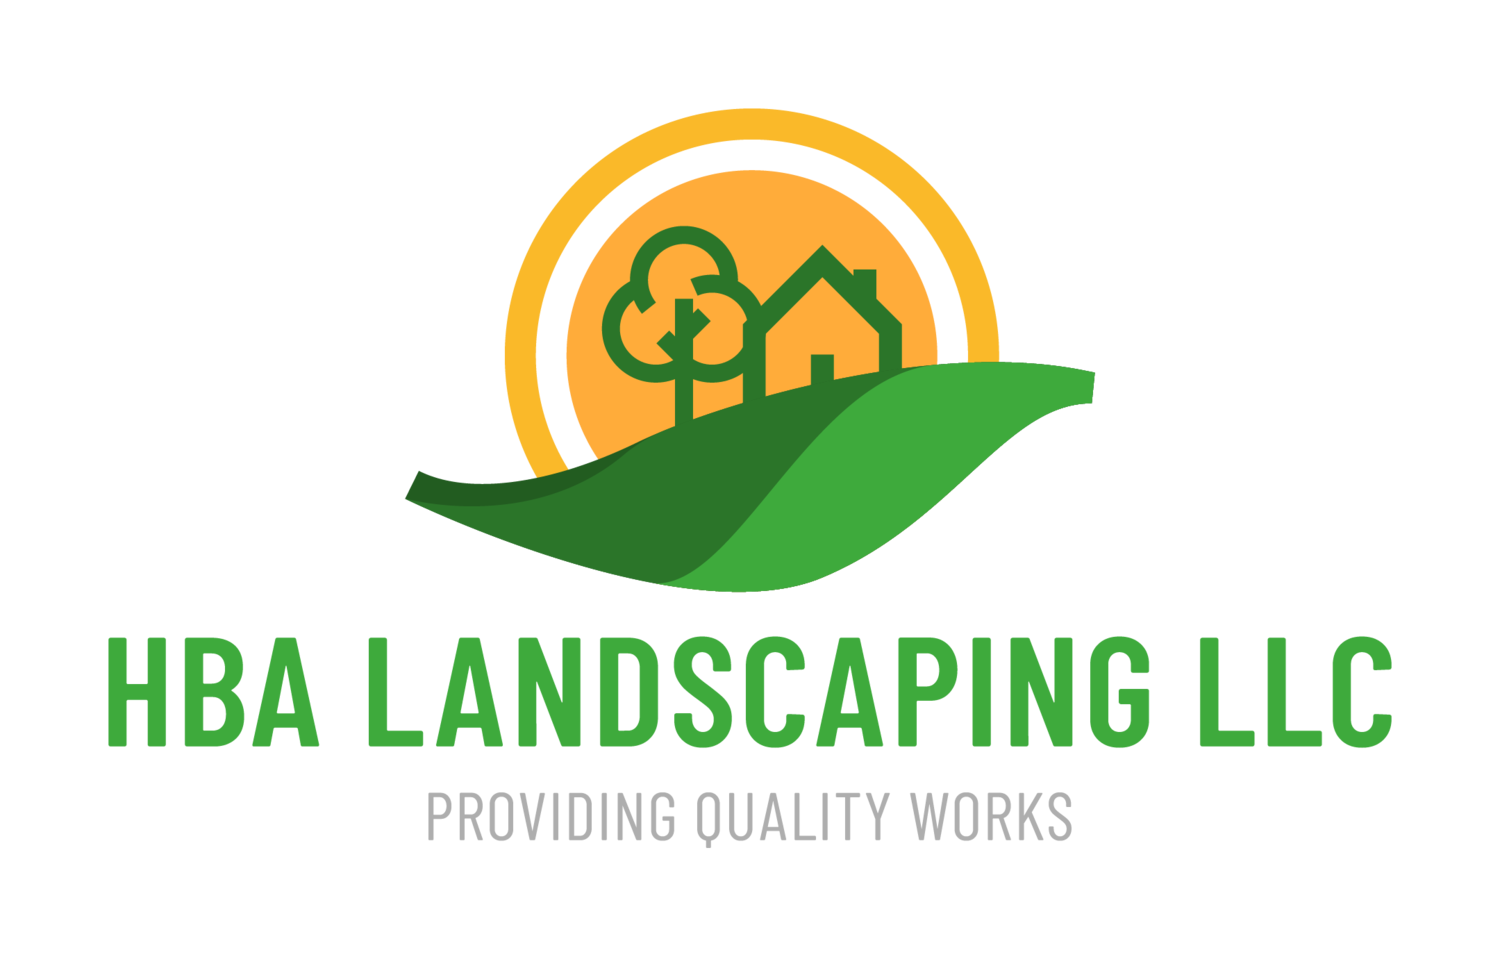 HBA Landscaping LLC